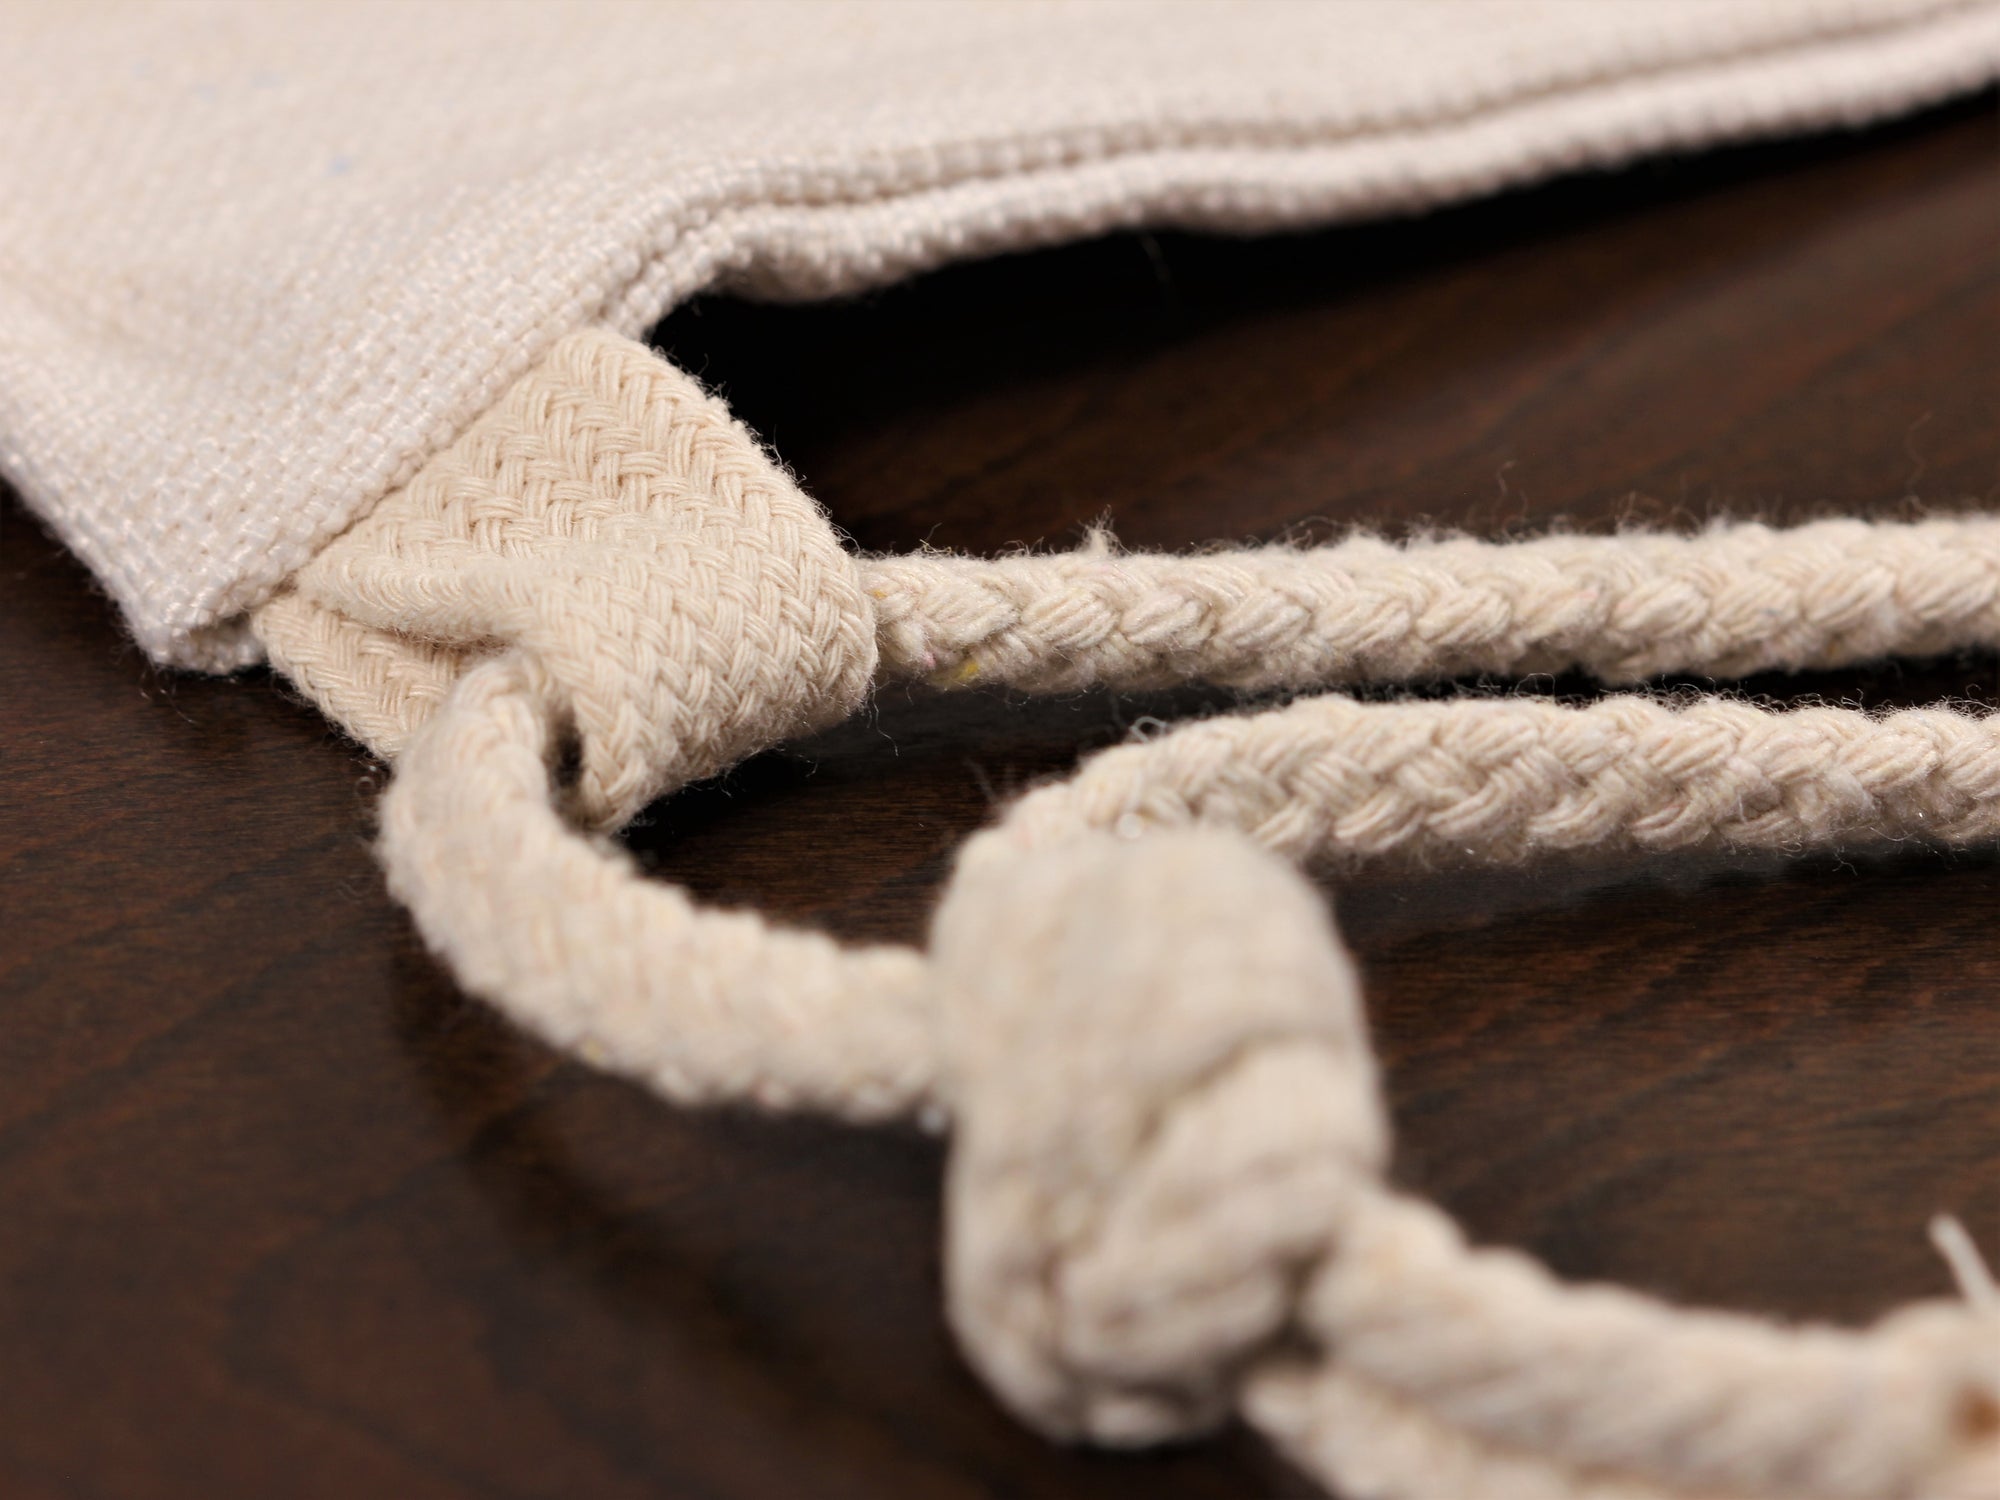 Blank/Customizable Linen Drawstring Bag